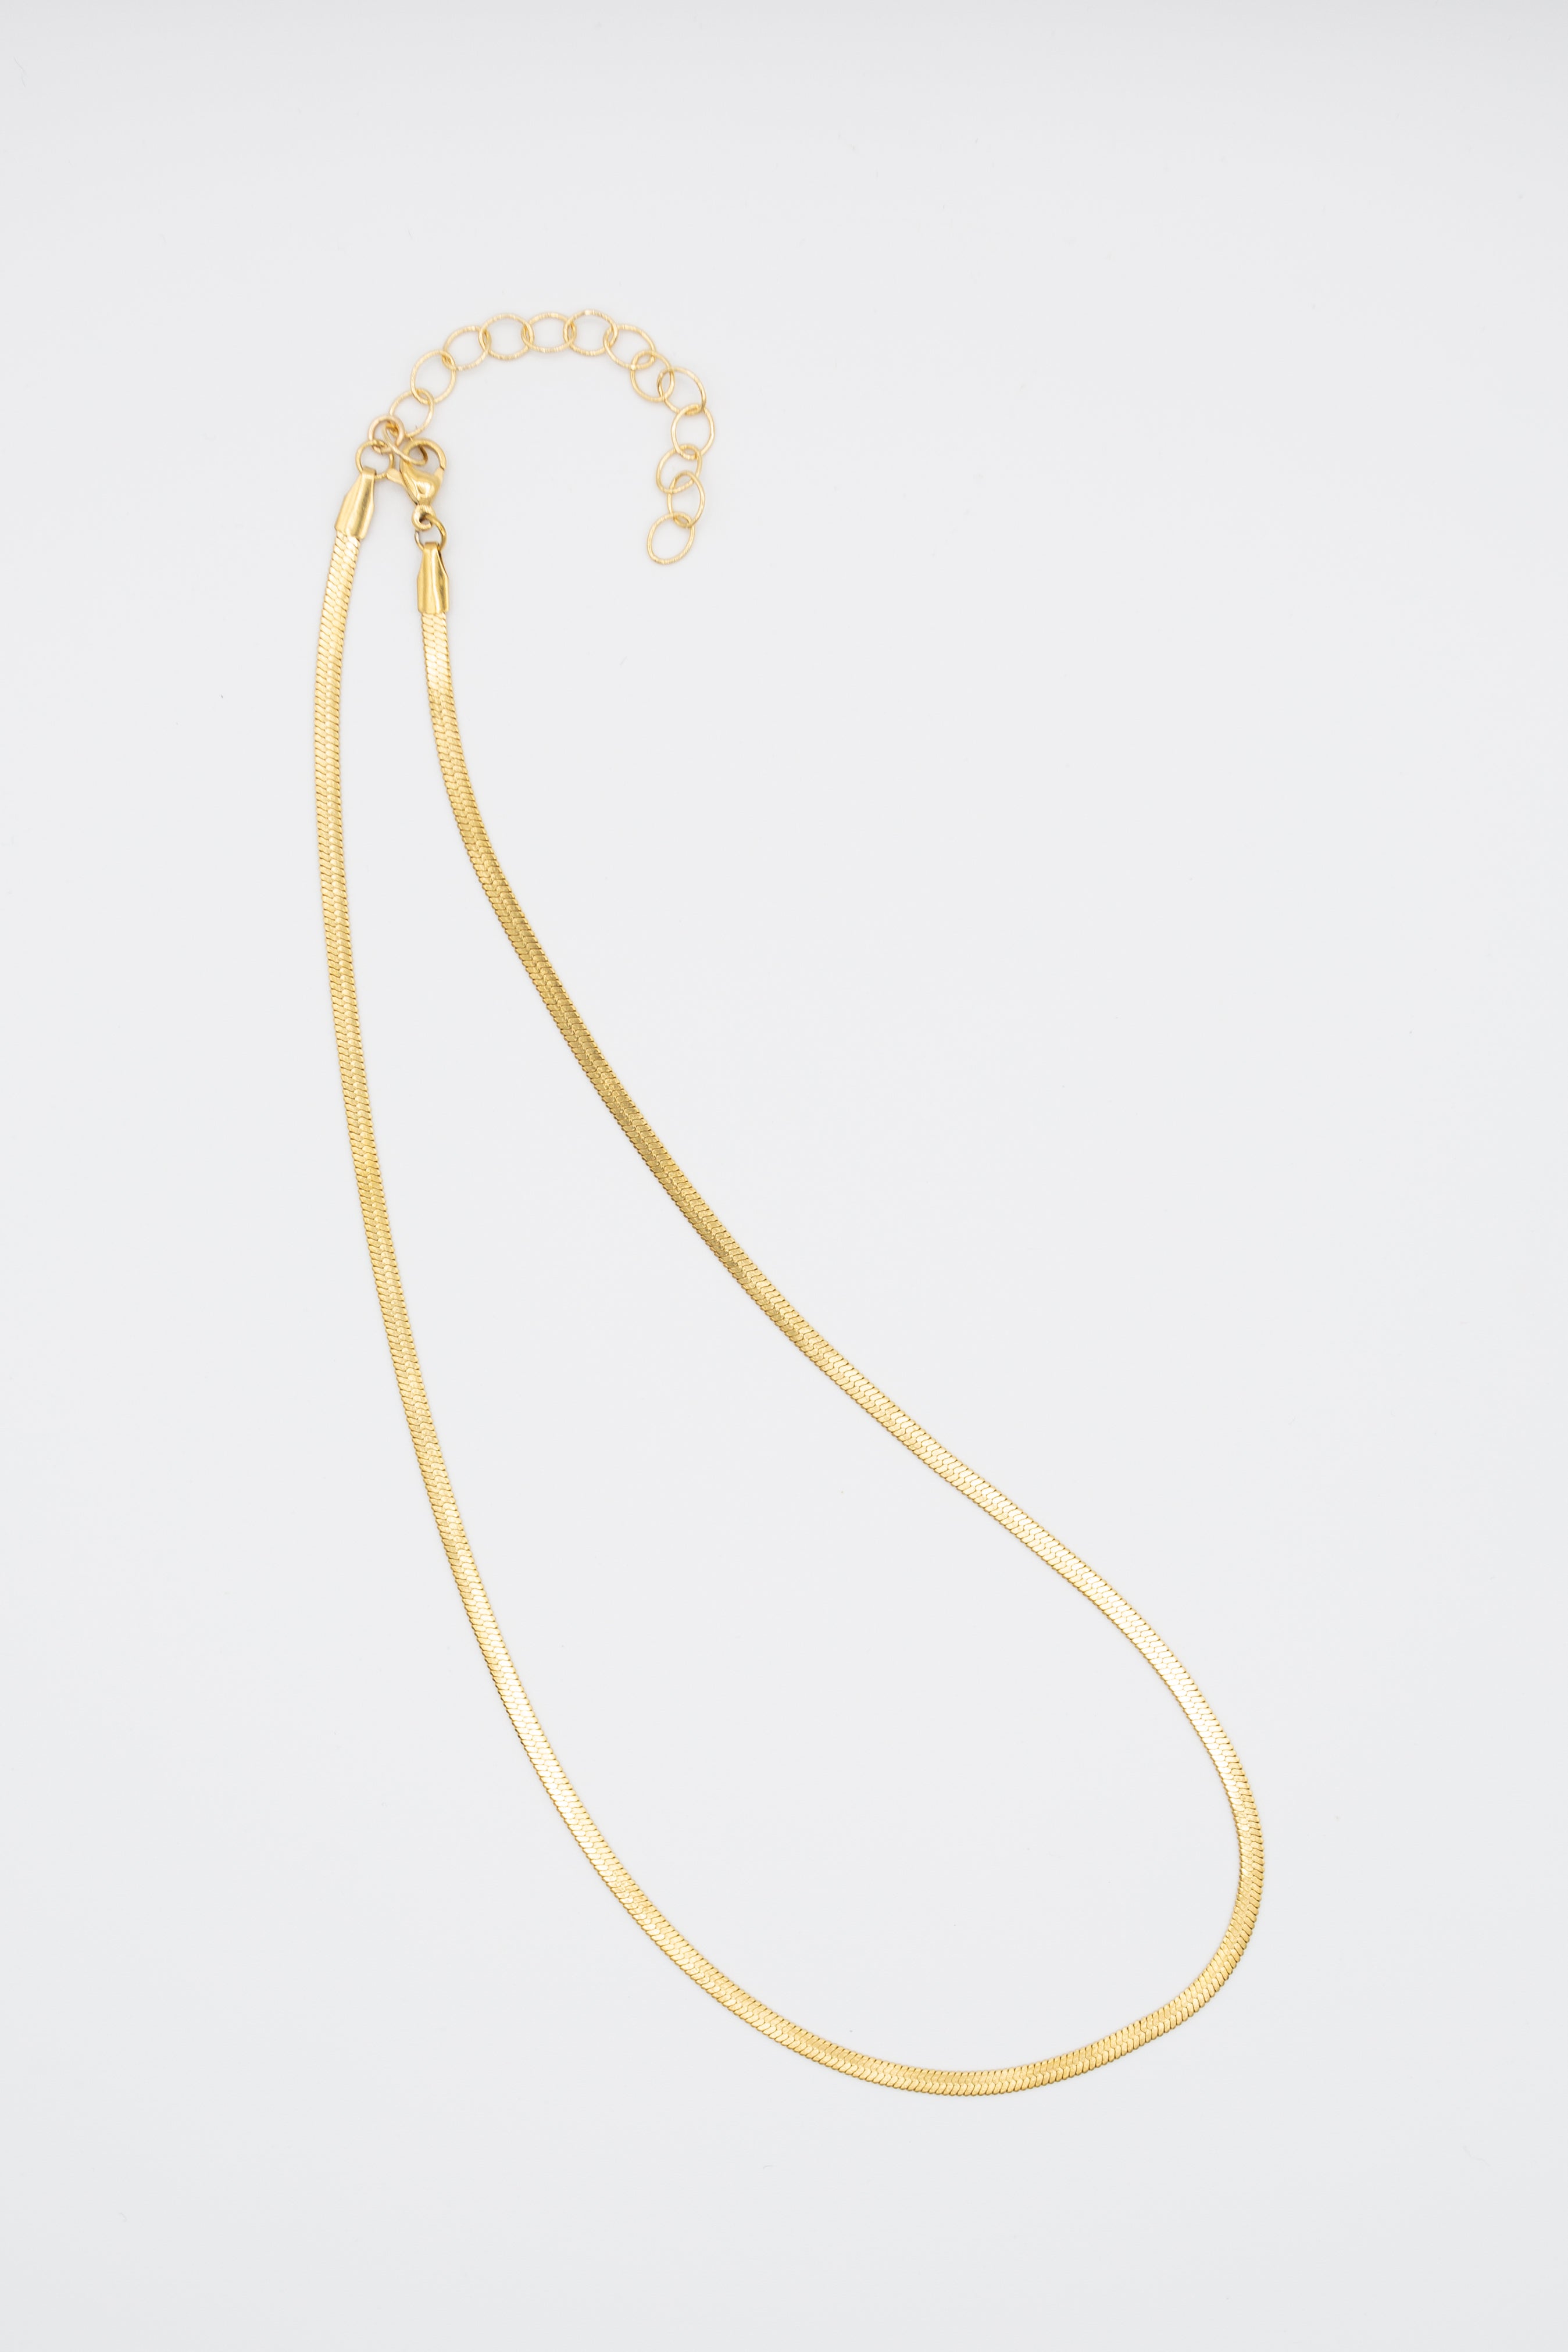 Gold Filled herringbone necklace